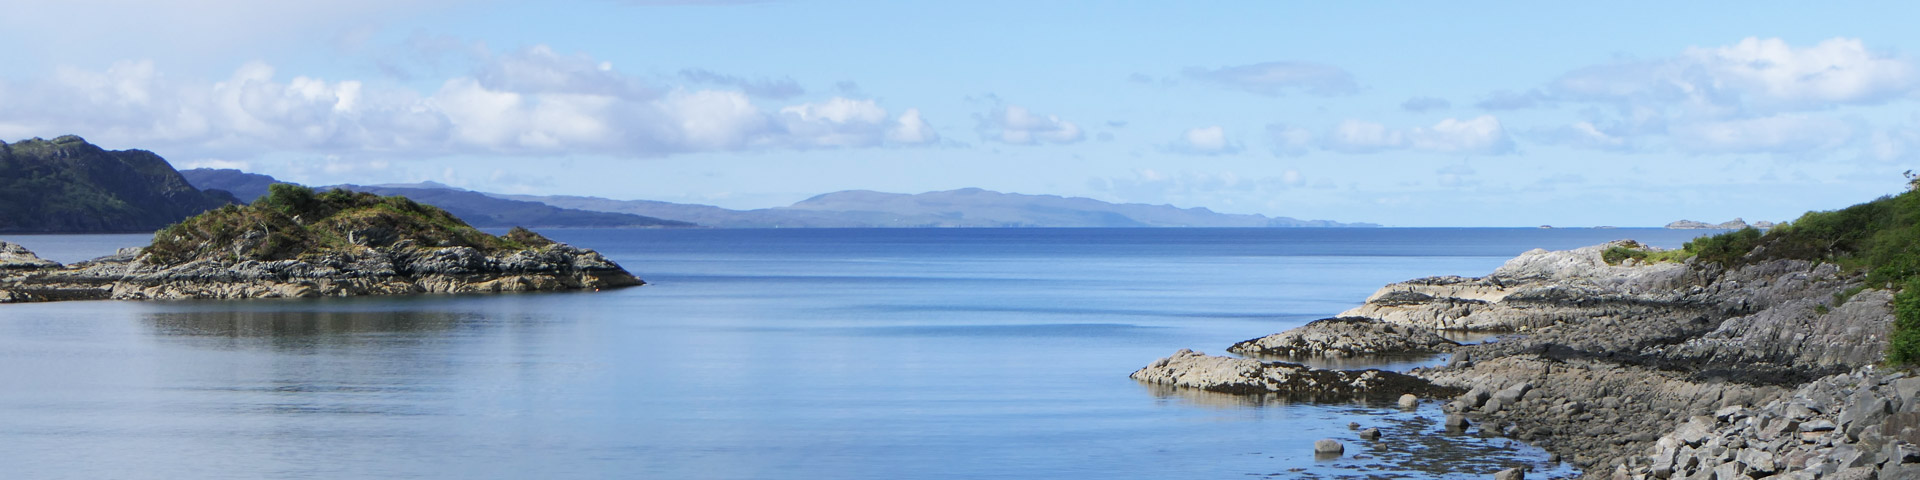 Loch Nan Uamh view towards Isle of Eigg